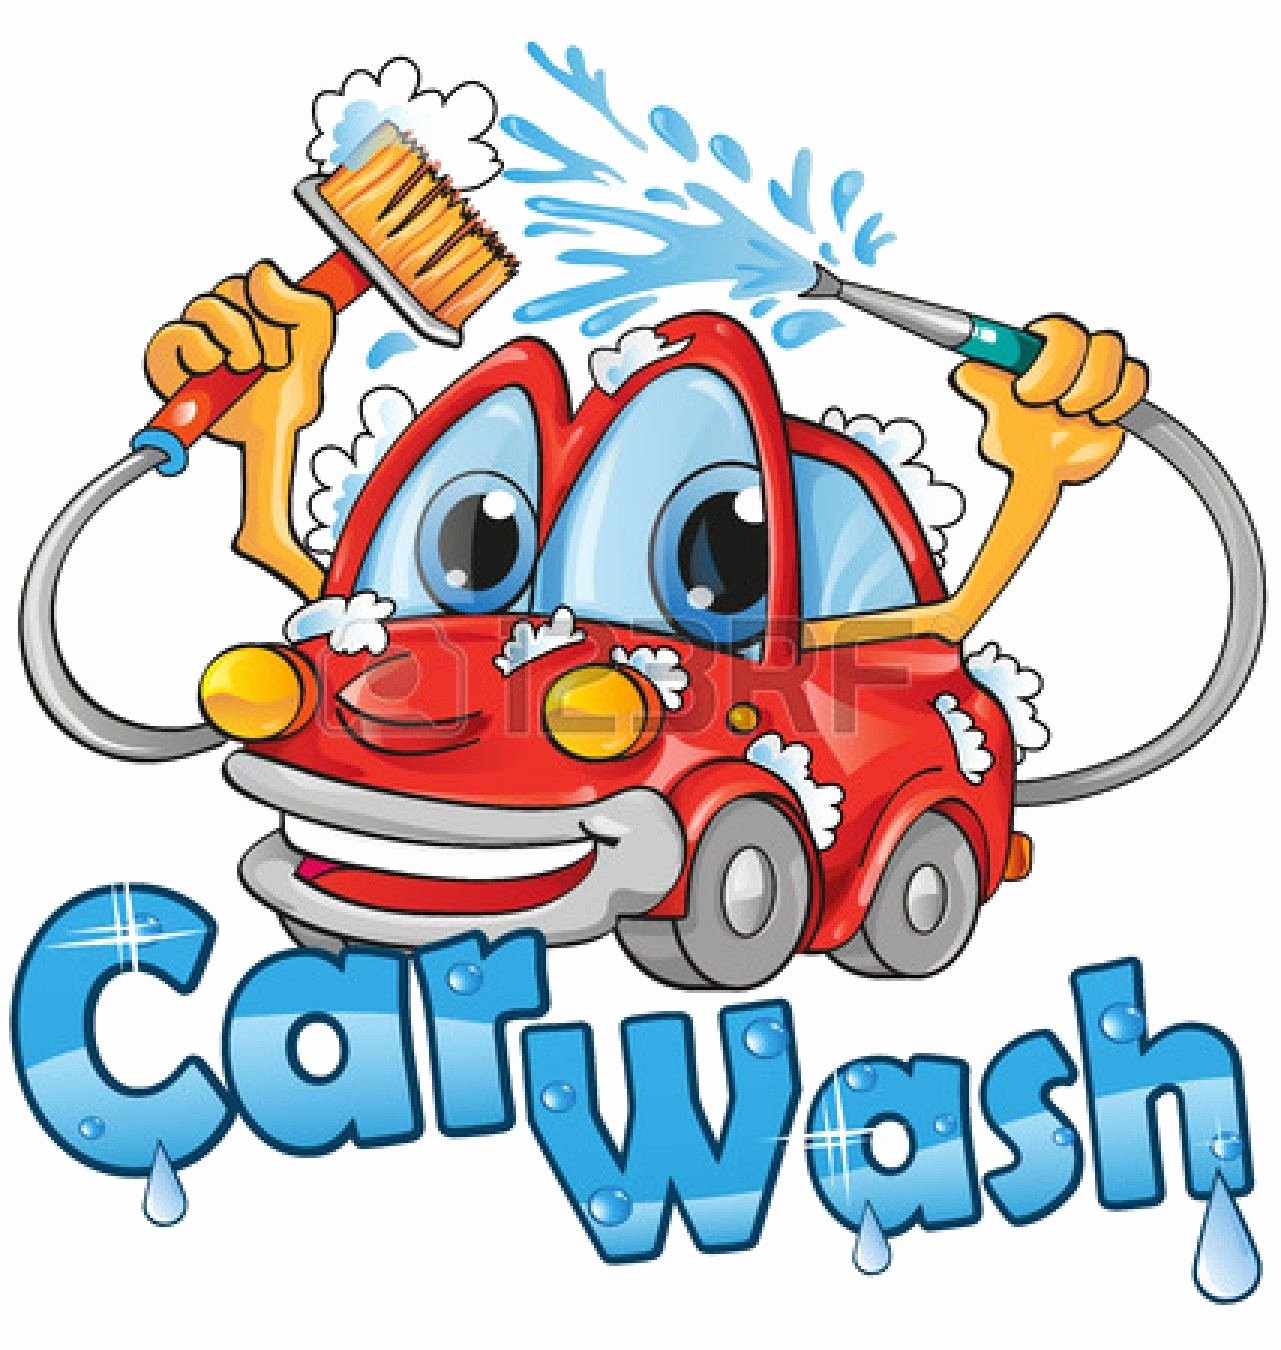 car wash fundraiser template fresh car wash fundraiser car wash fundraiser clipart of car wash fundraiser template